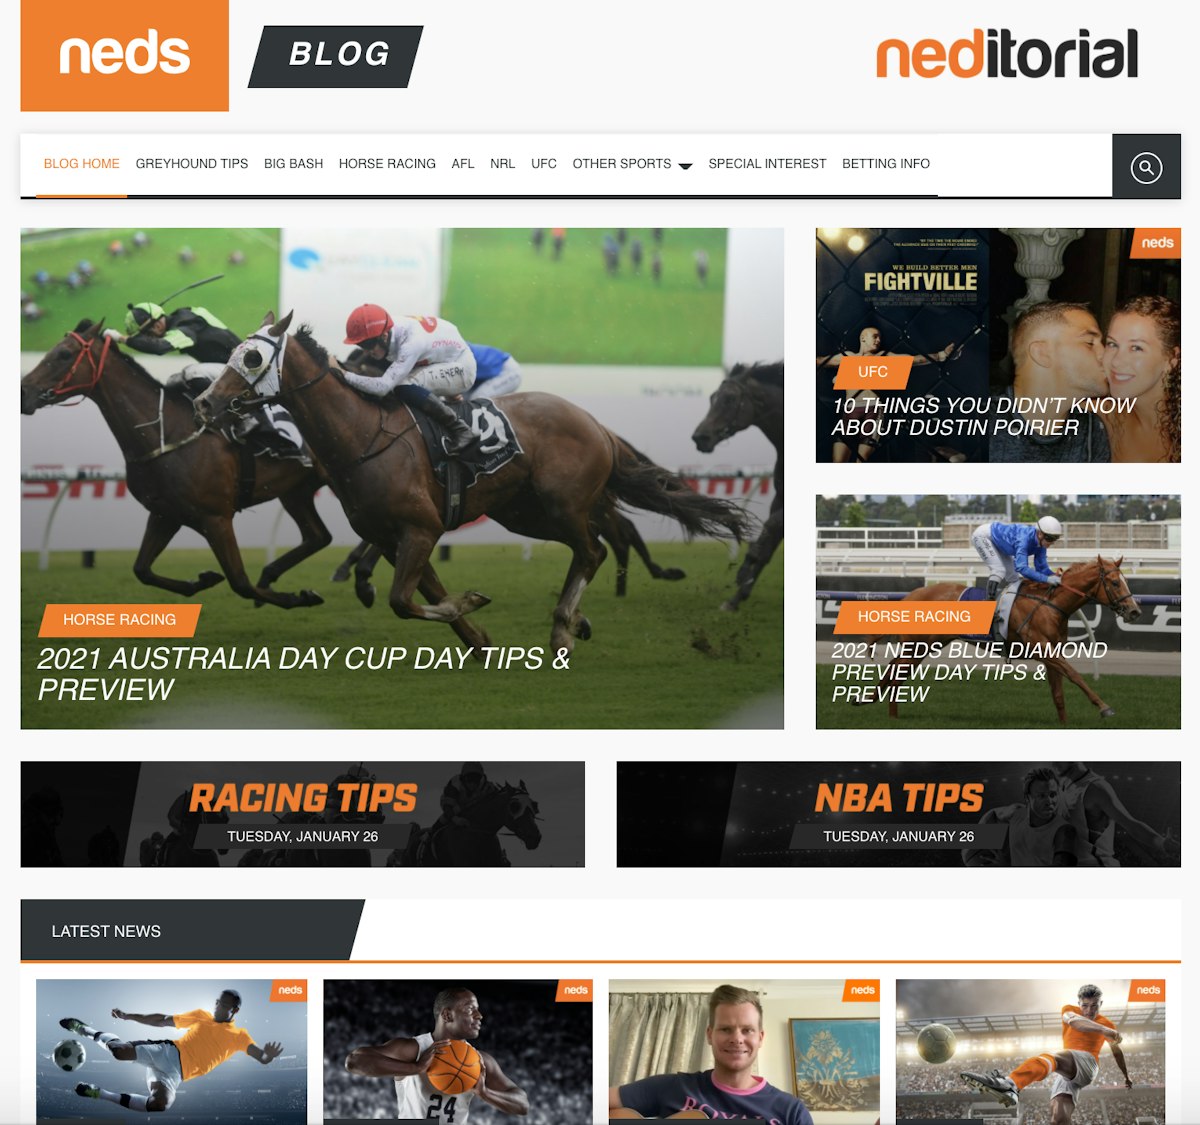 NRL Round 8 Tips & Preview - Neds Blog